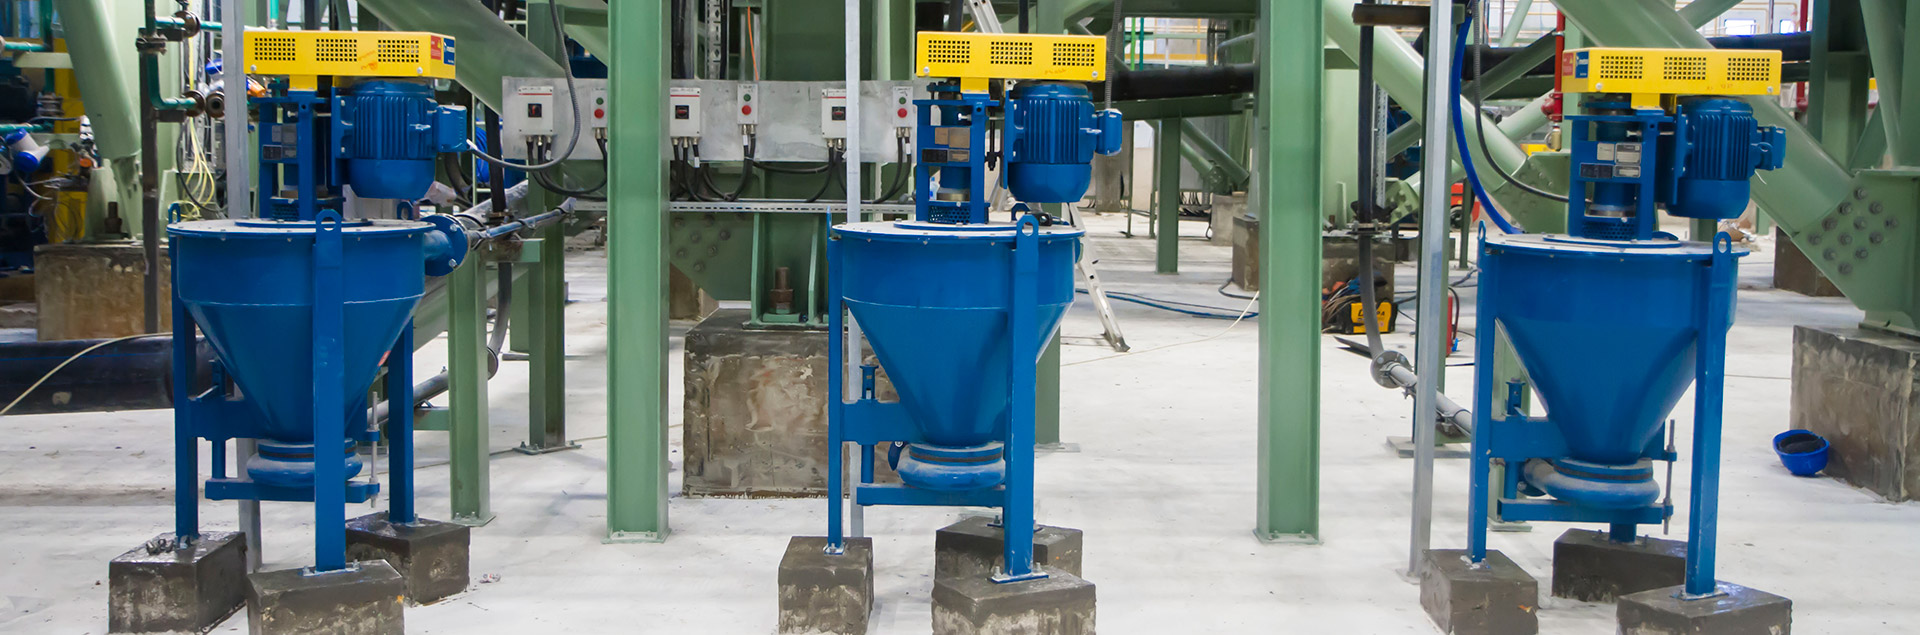 Vertical slurry pumps at a customer site.